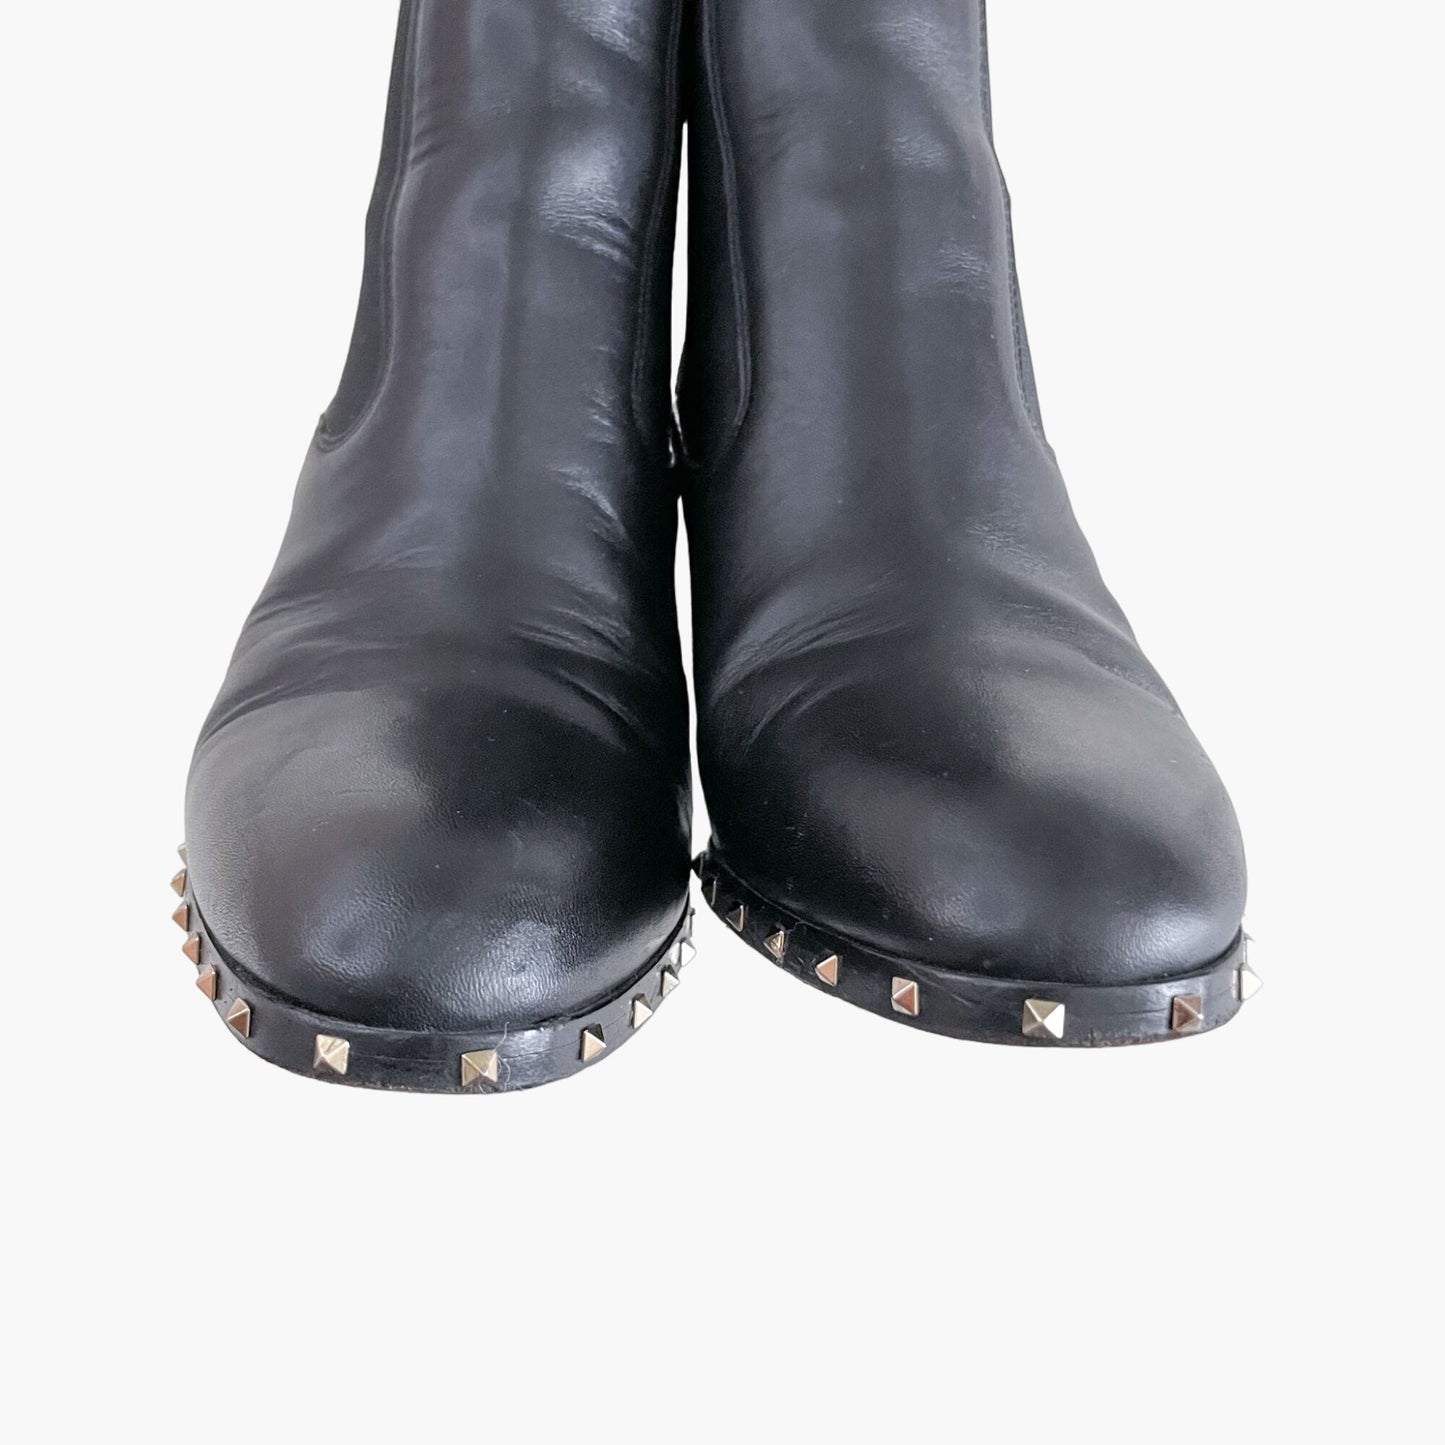 Valentino Garavani Soul Rockstud Chelsea Boot in Black Leather Size 37.5